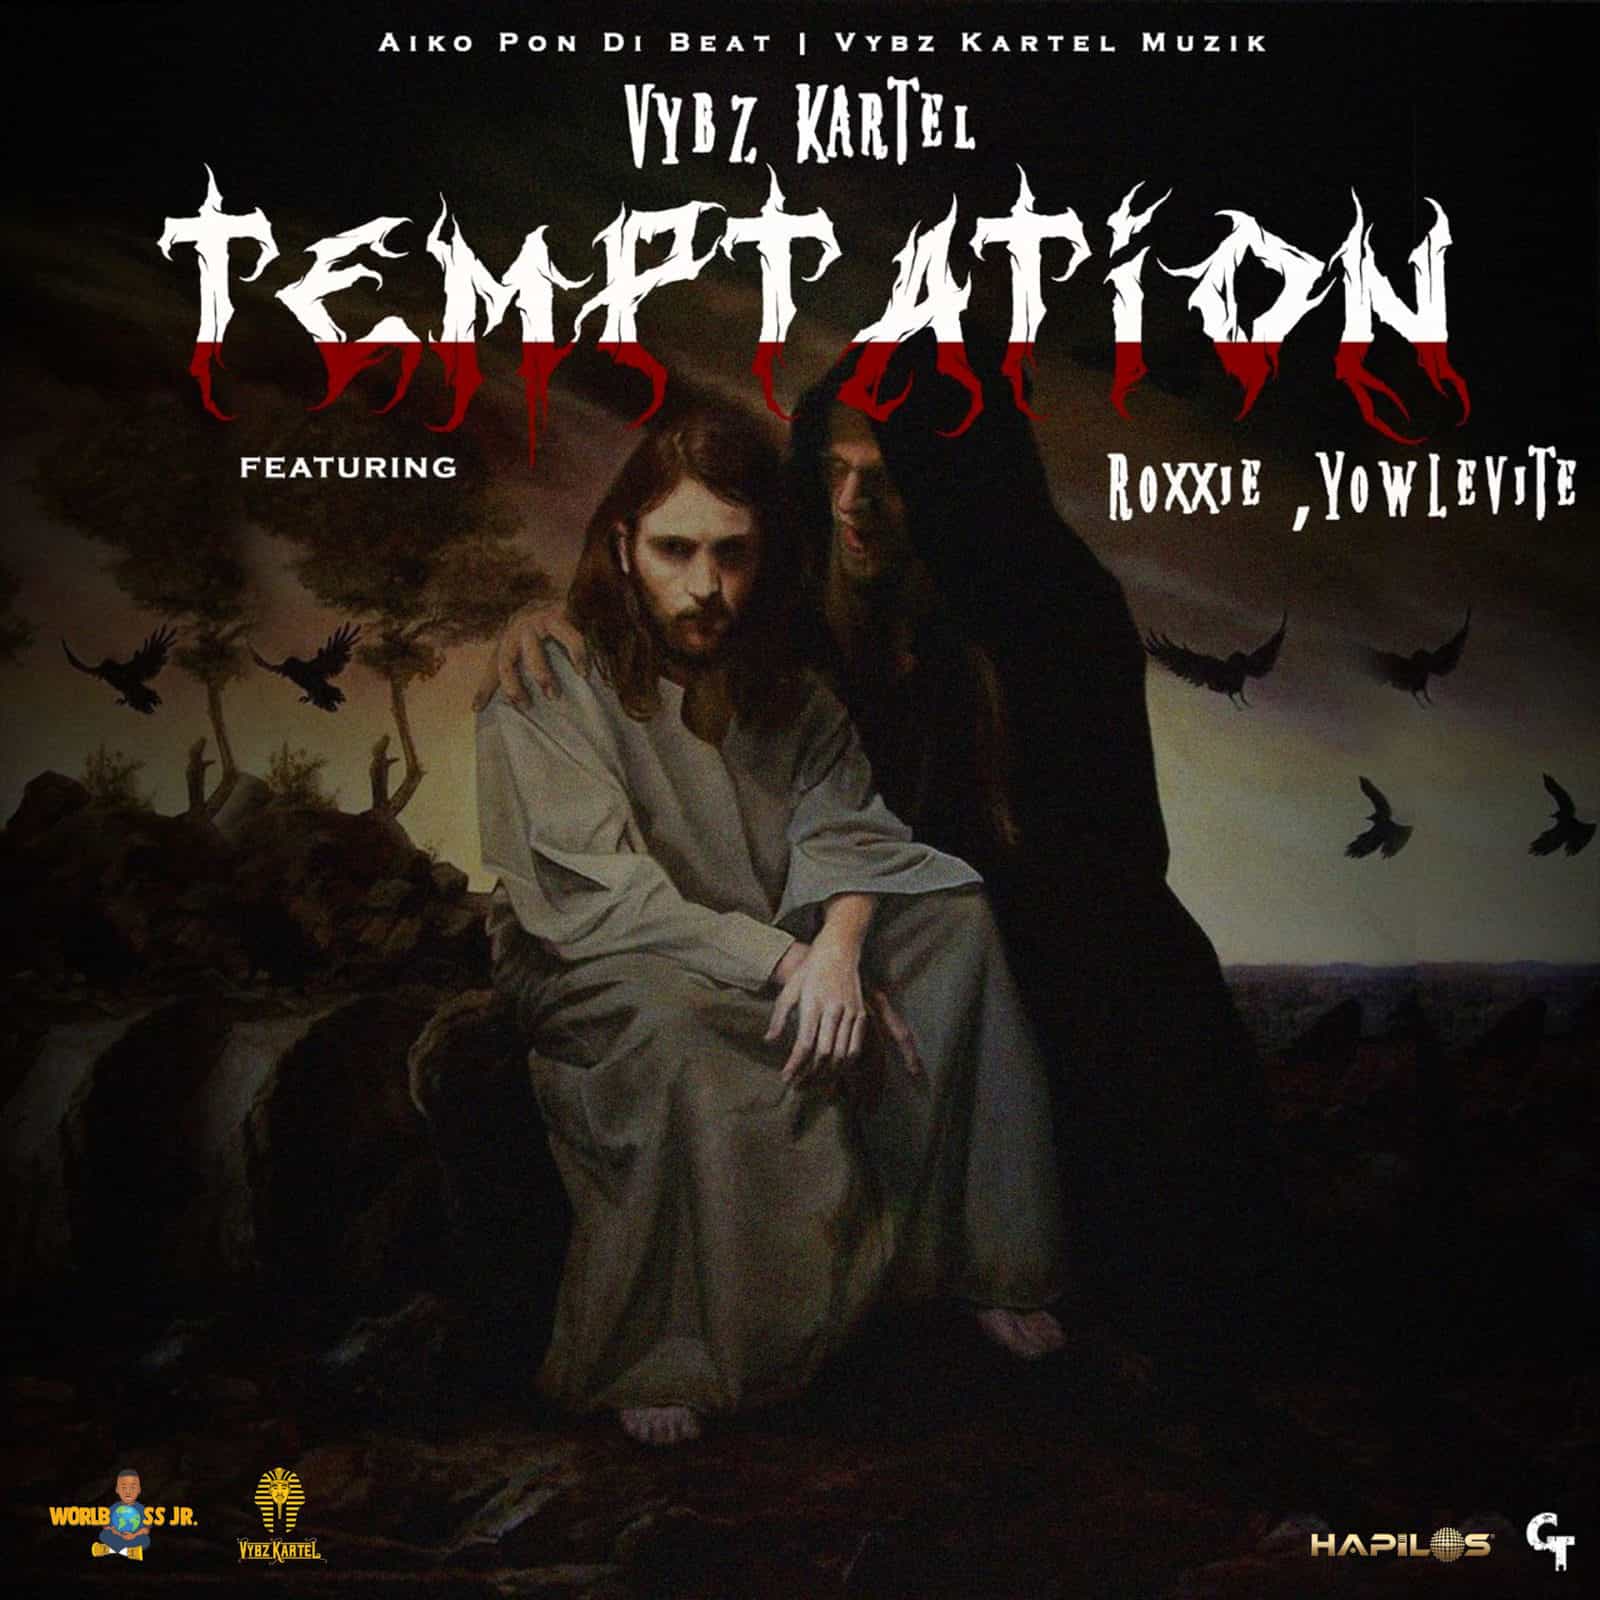 Vybz Kartel -Temptation (feat. Roxxie & YowLevite) - Aiko Pon Di Beat / Vybz Kartel Muzik